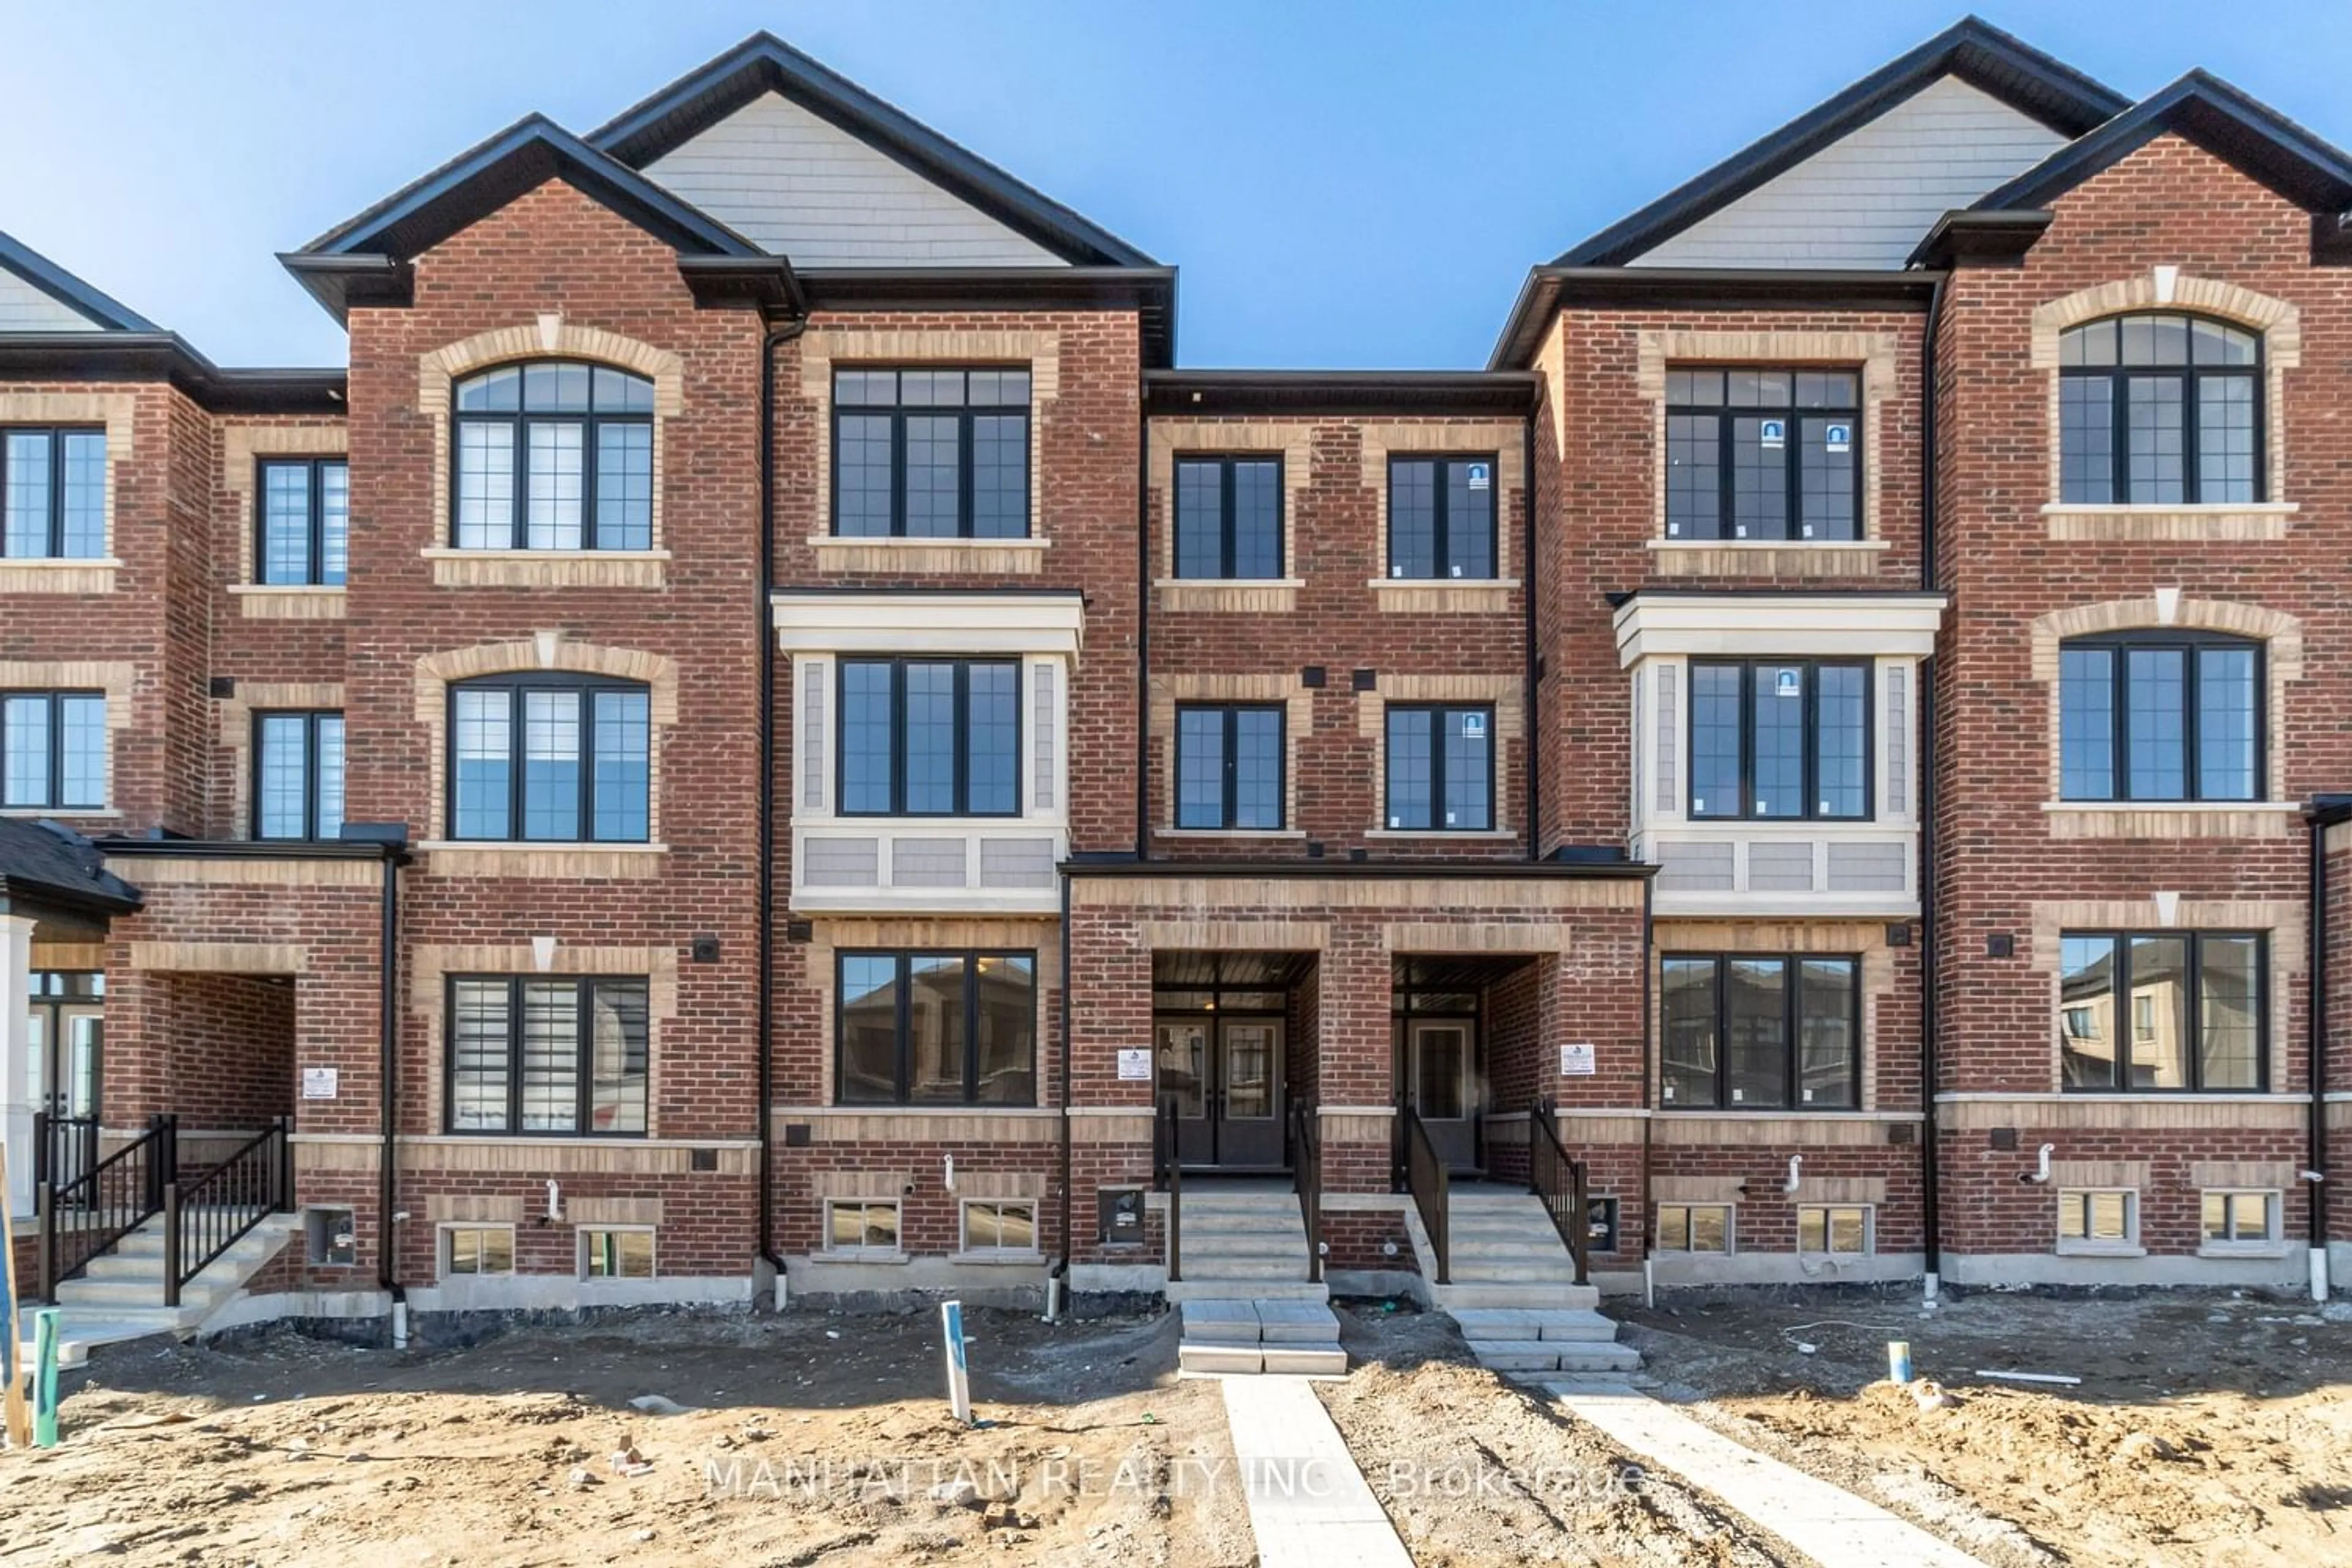 Home with brick exterior material for 2646 Delphinium Tr, Pickering Ontario L1X 0M1